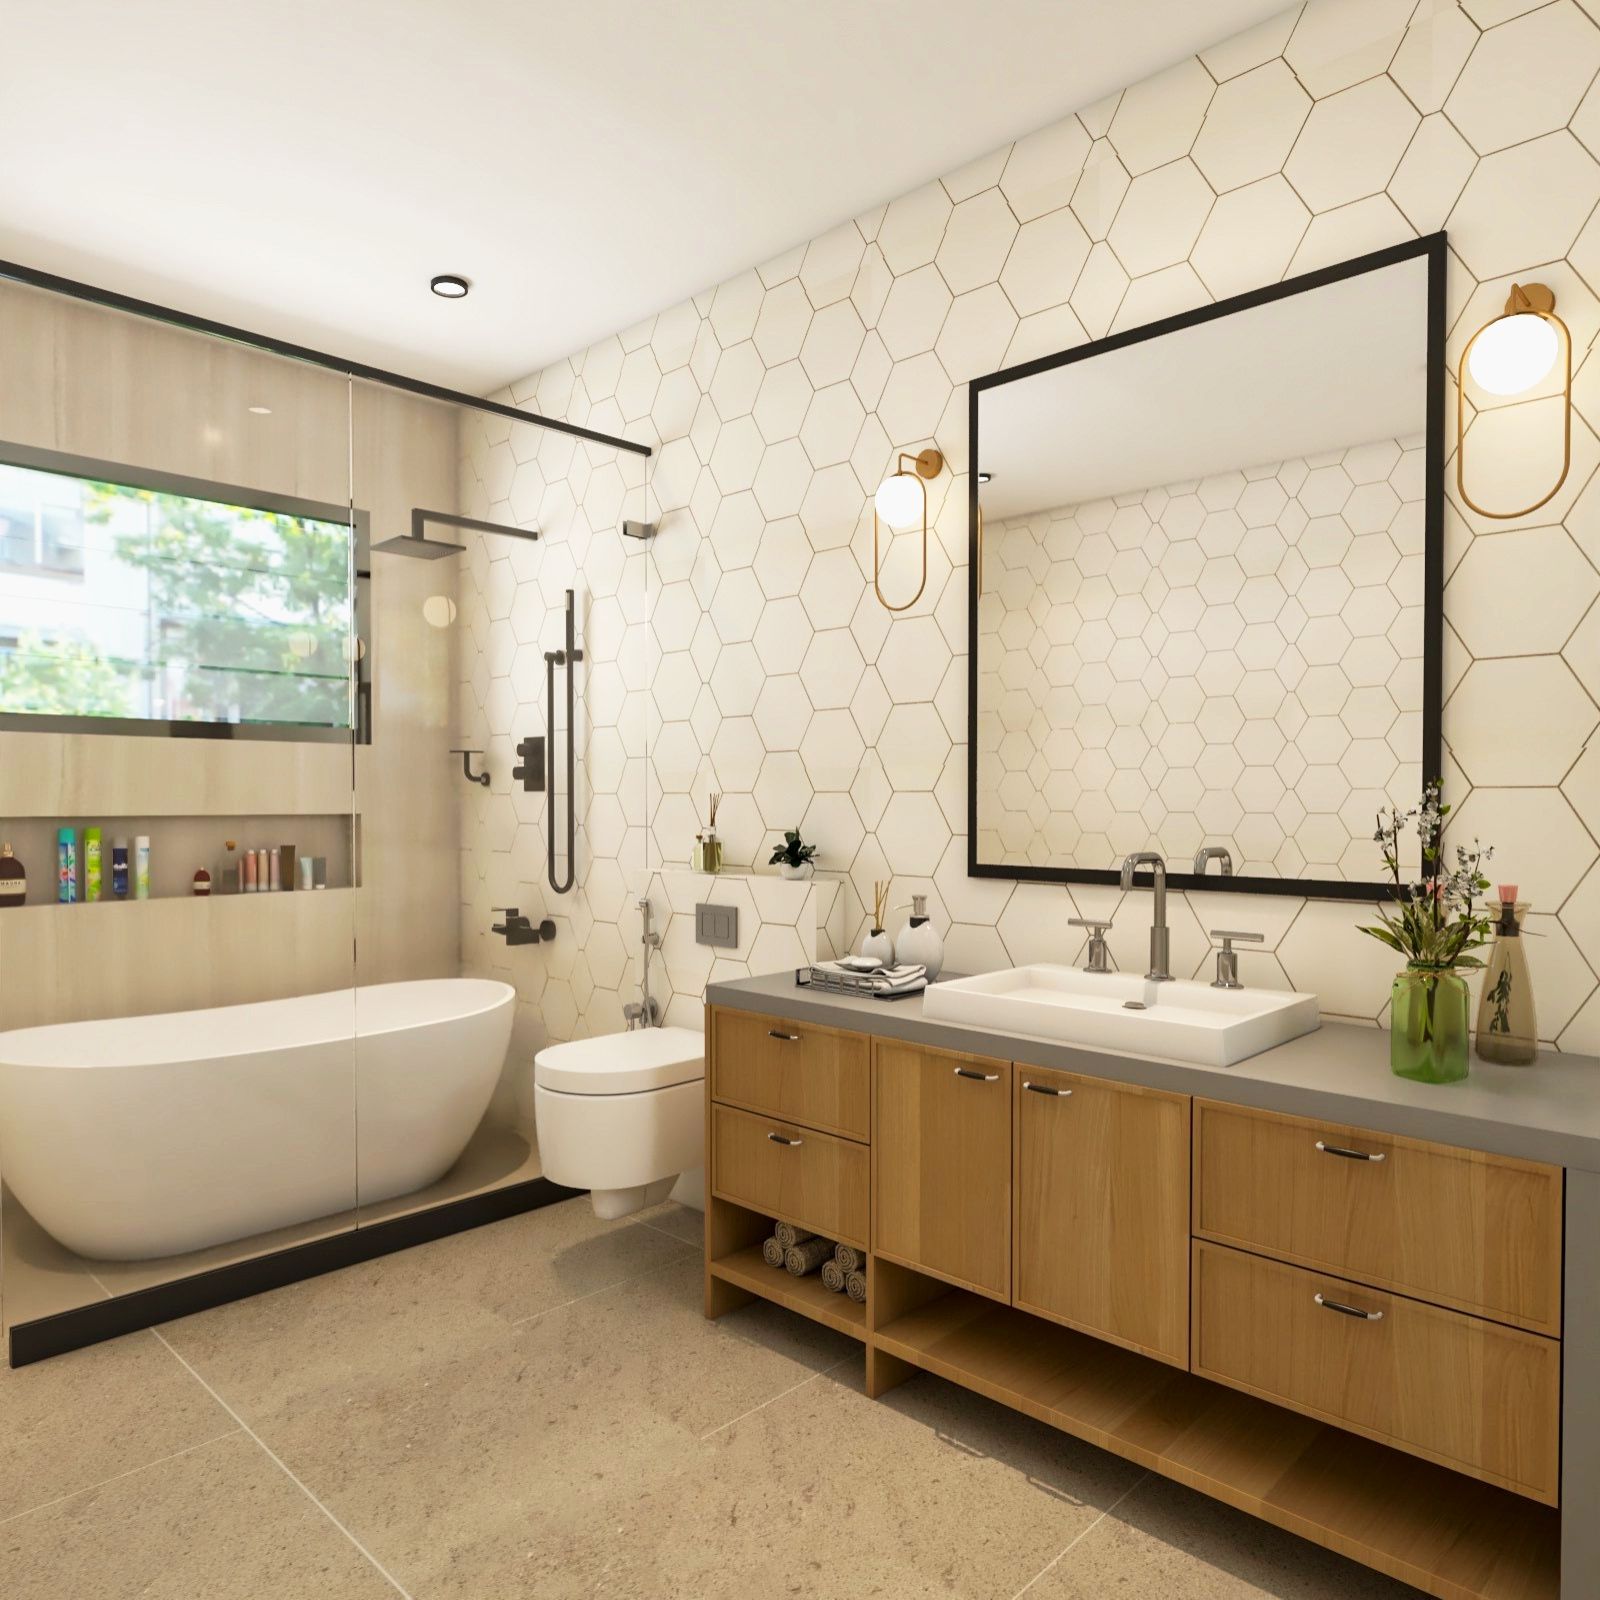 Contemporary Small Bathroom Design With Off-White Hexagonal Wall Tiles